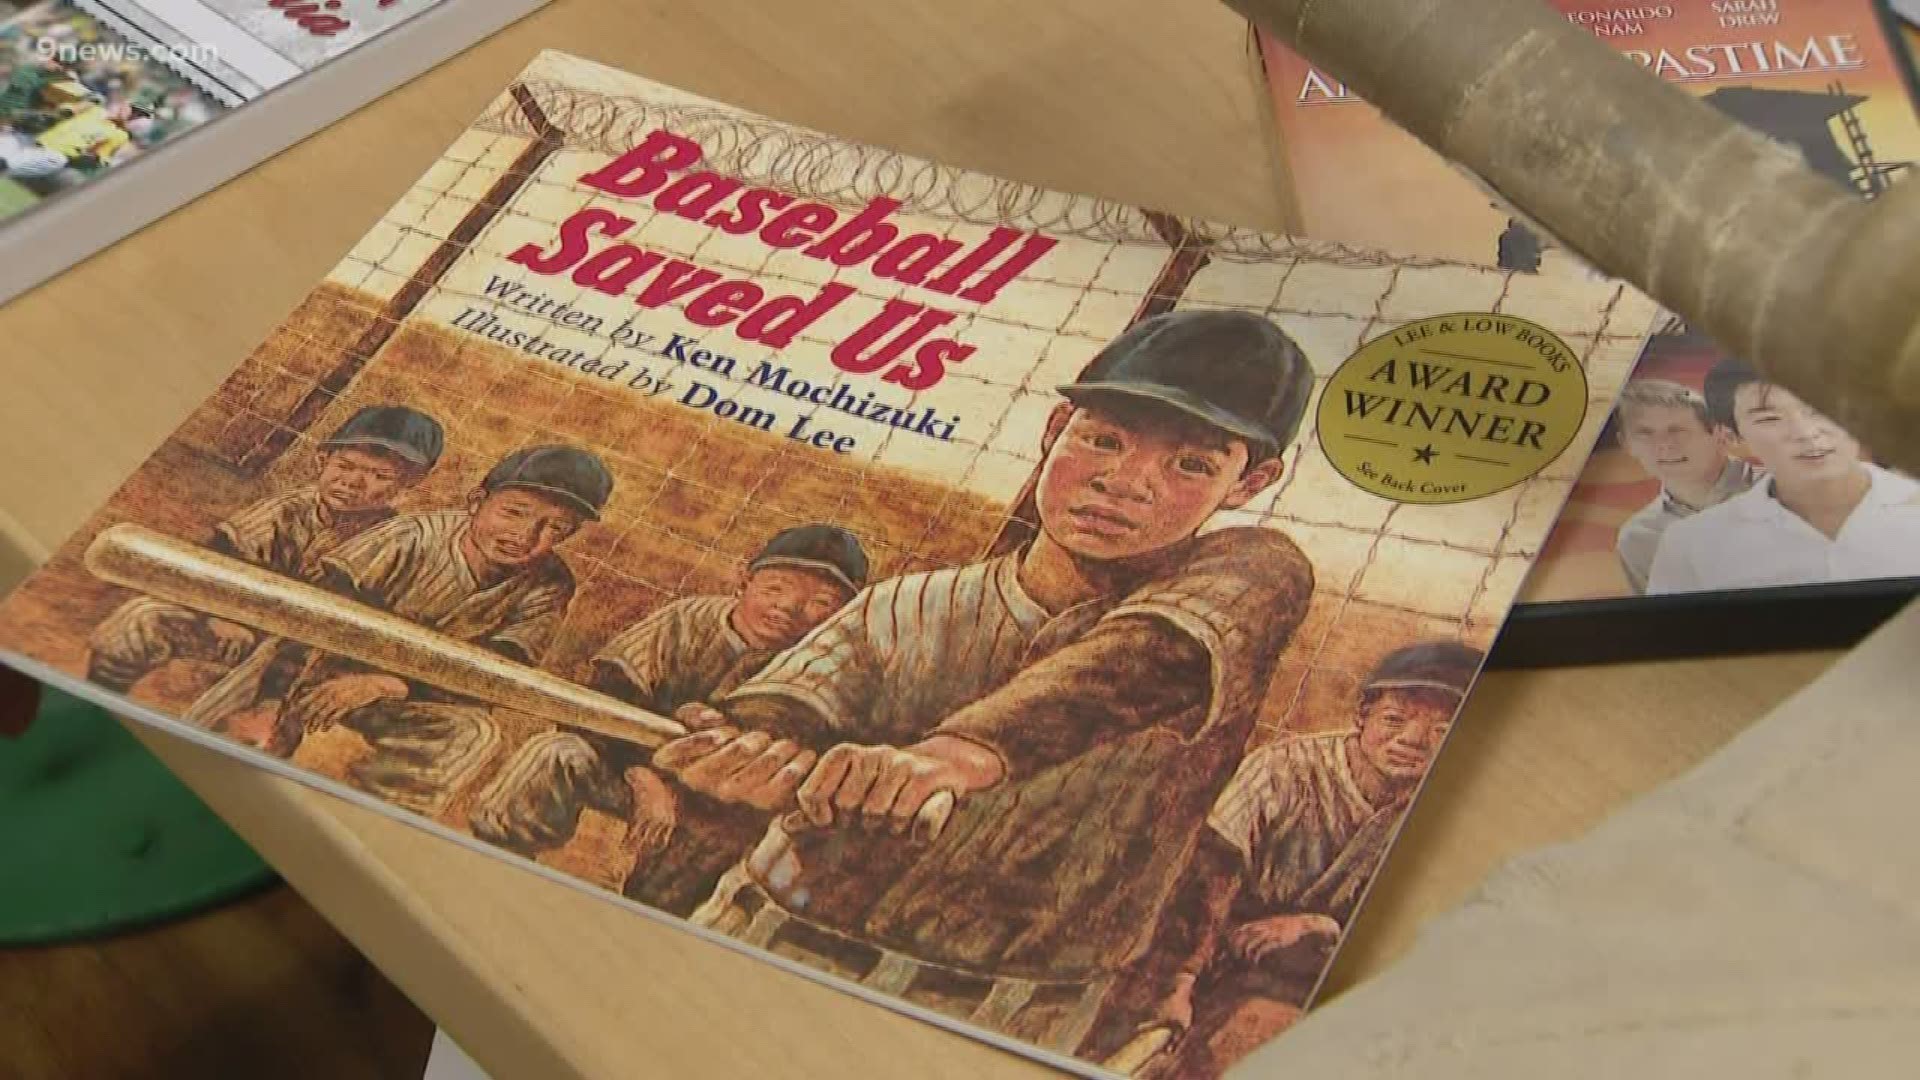 The Japanese-American baseball exhibit runs through August at the National Ballpark Museum in Denver.